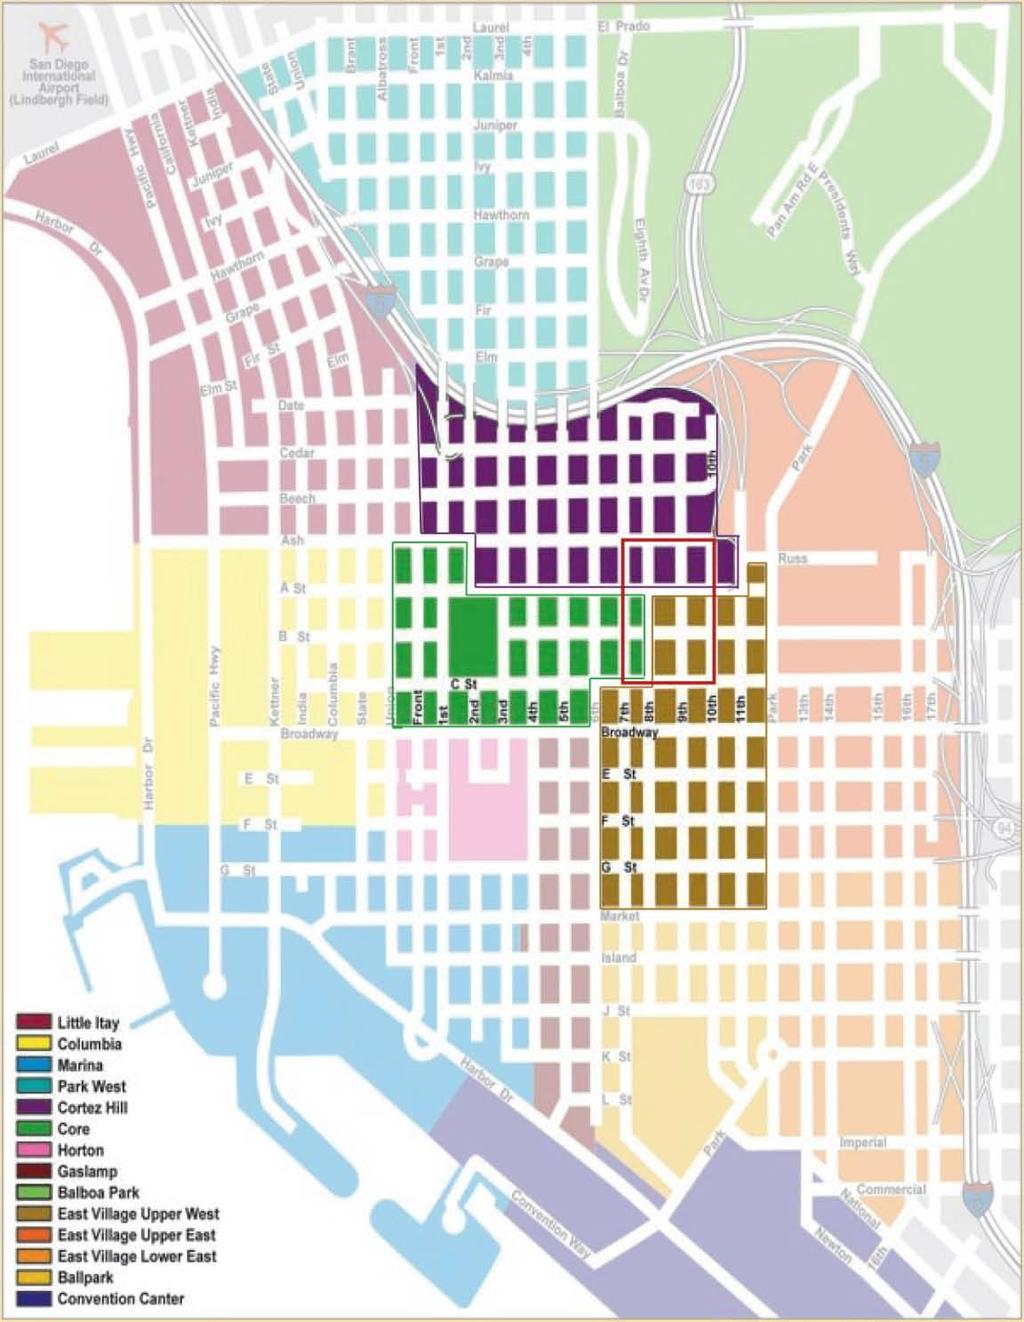 2. LOCATION within surrounding neighborhoods.